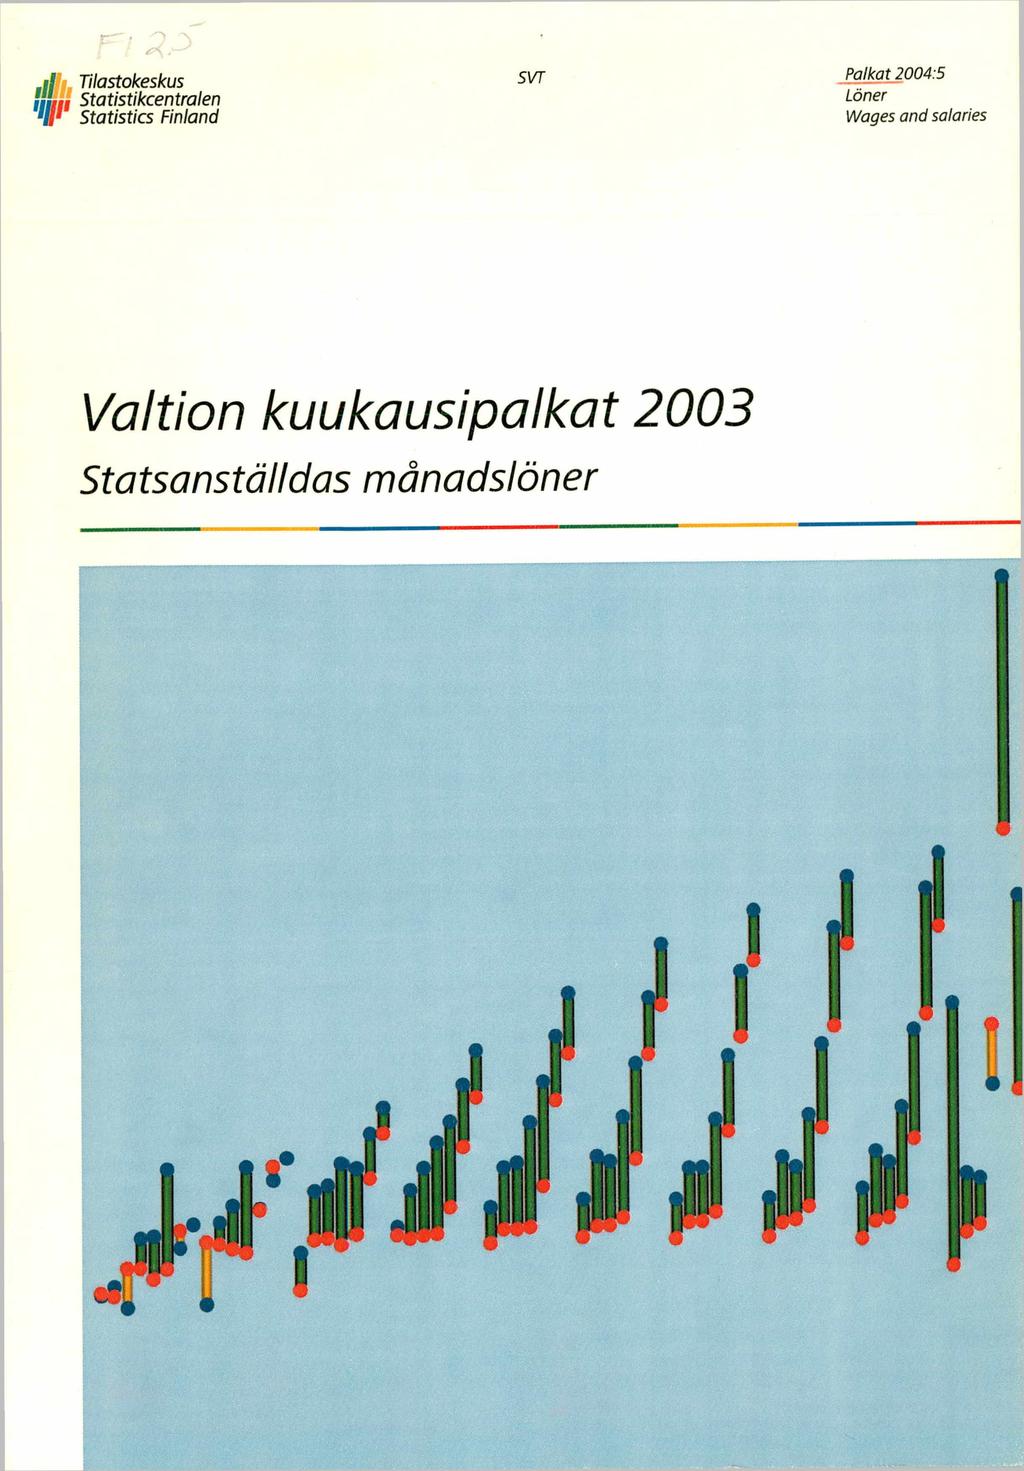 , l Tilastokeskus //» Statistikcentralen 'IP Statistics Finland Palkat 2004:5